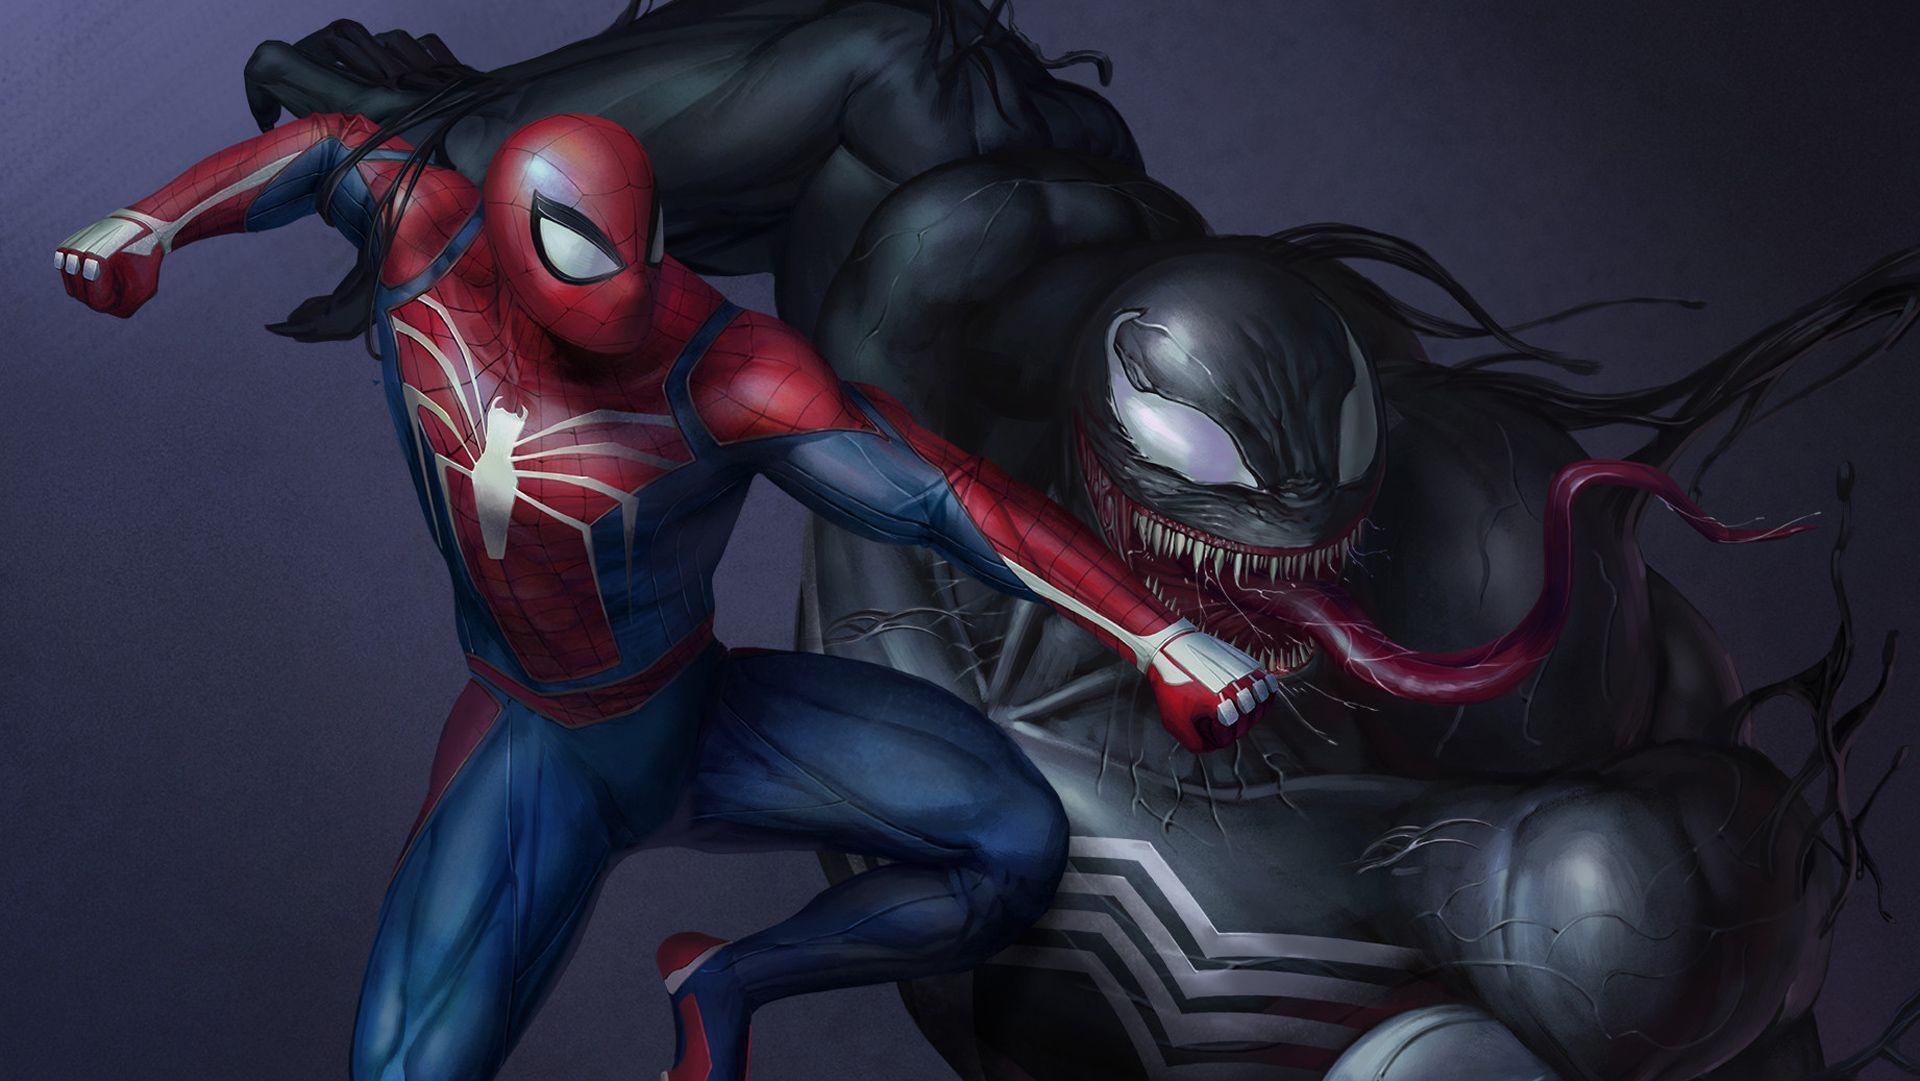 Spider Man Vs Venom Wallpapers Top Free Spider Man Vs Venom Backgrounds Wallpaperaccess 